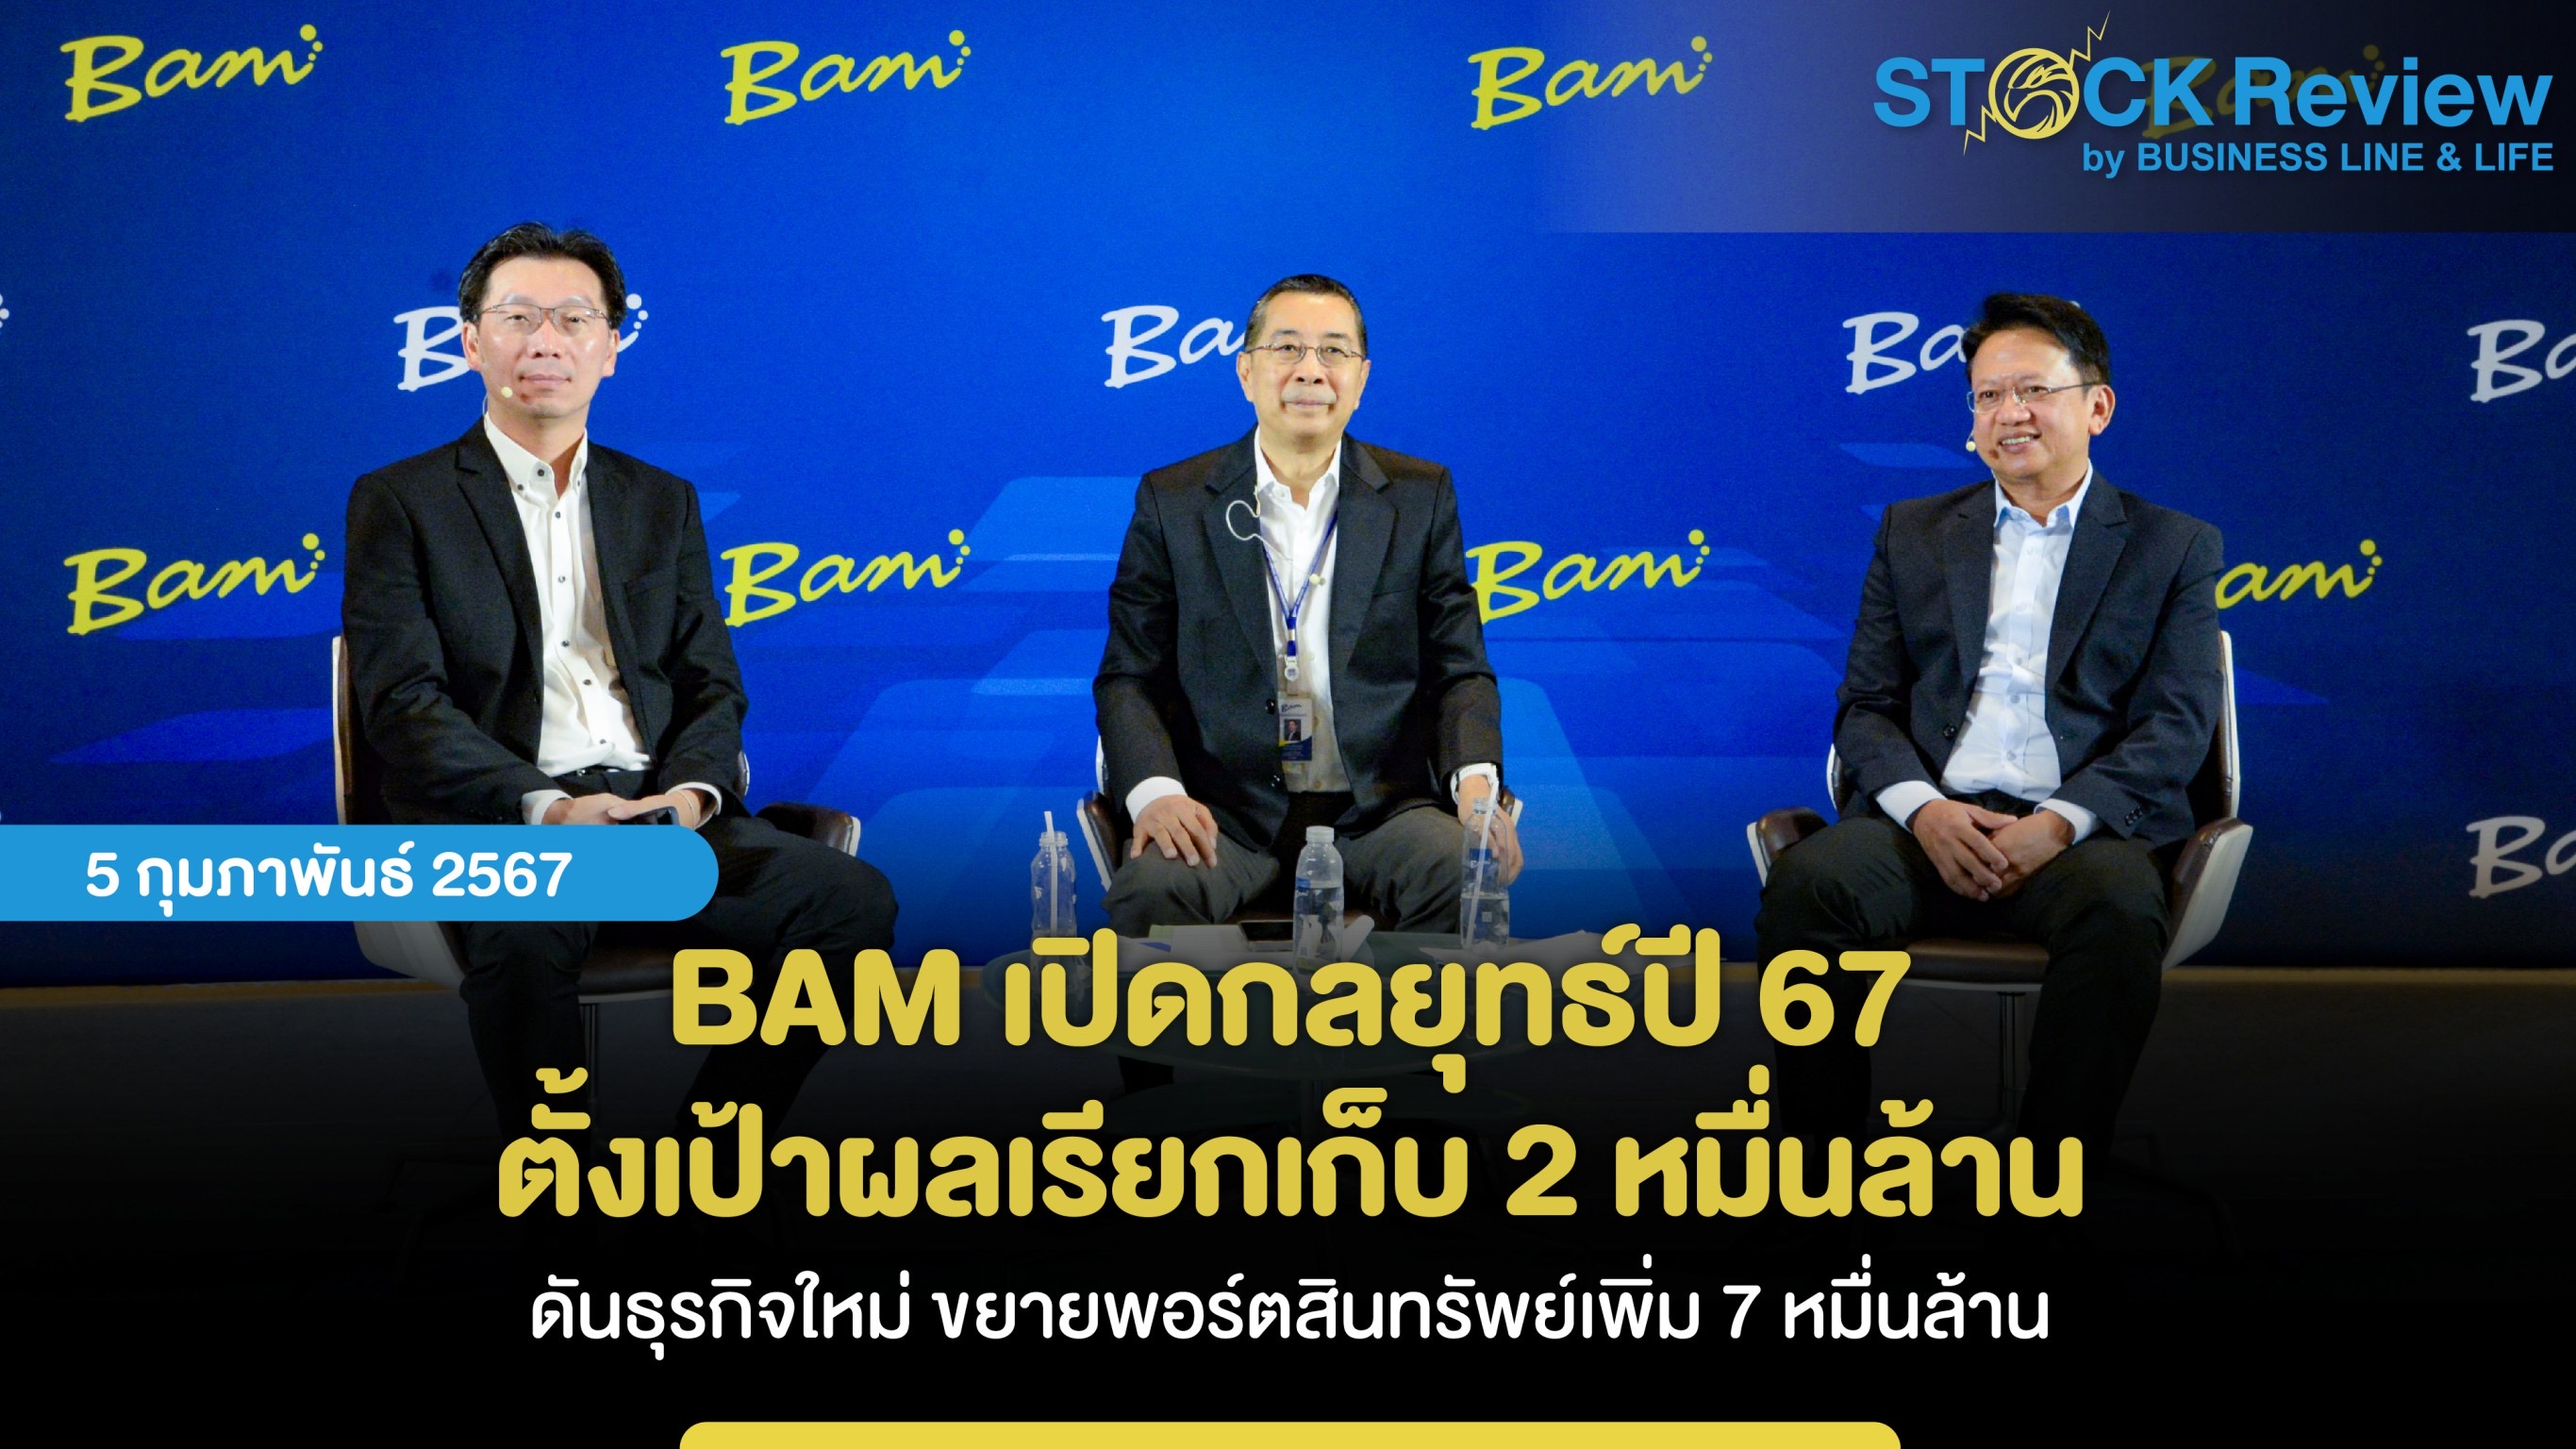 BAM เปิดกลยุทธ์ปี 67 ตั้งเป้าผลเรียกเก็บ 2 หมื่นล้าน ดันธุรกิจใหม่ ขยายพอร์ตสินทรัพย์เพิ่ม 7 หมื่นล้าน